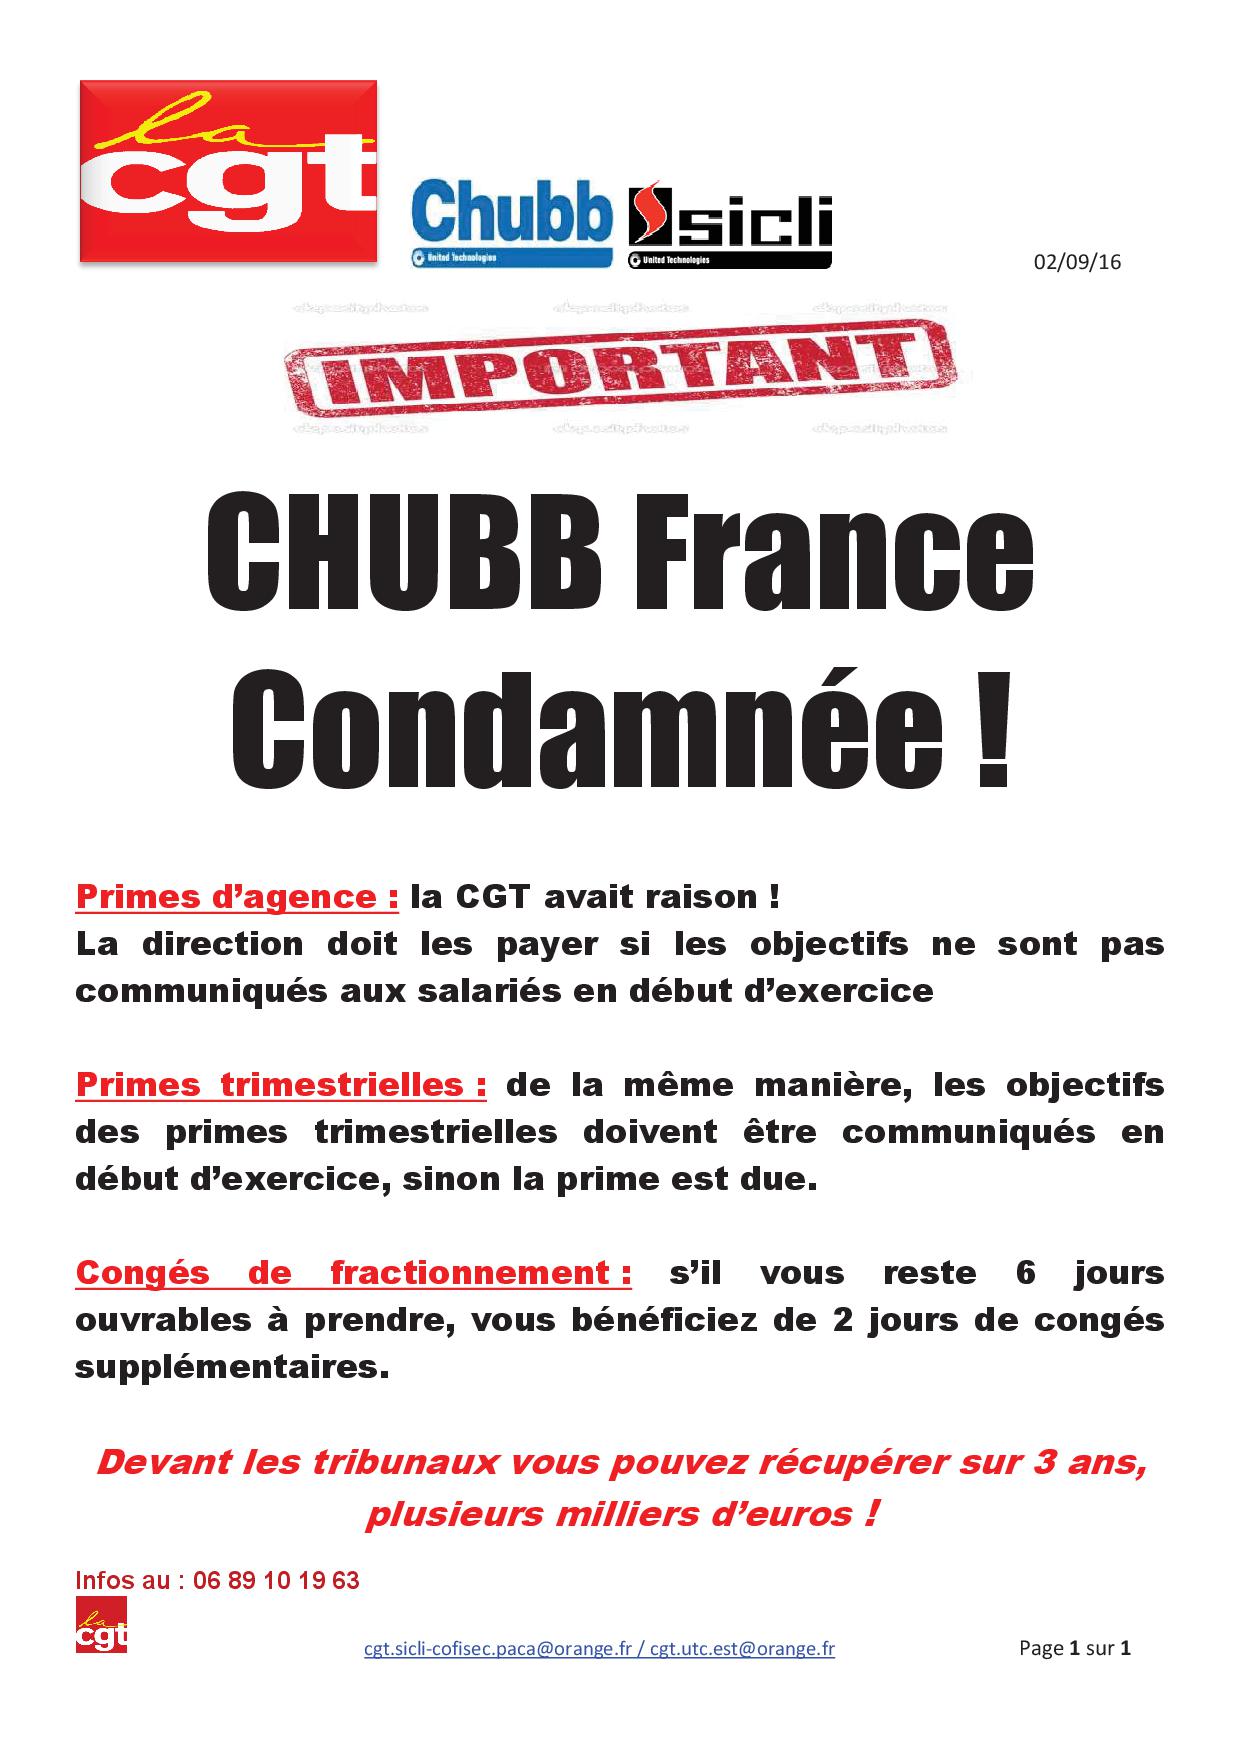 Chubb france condamnee